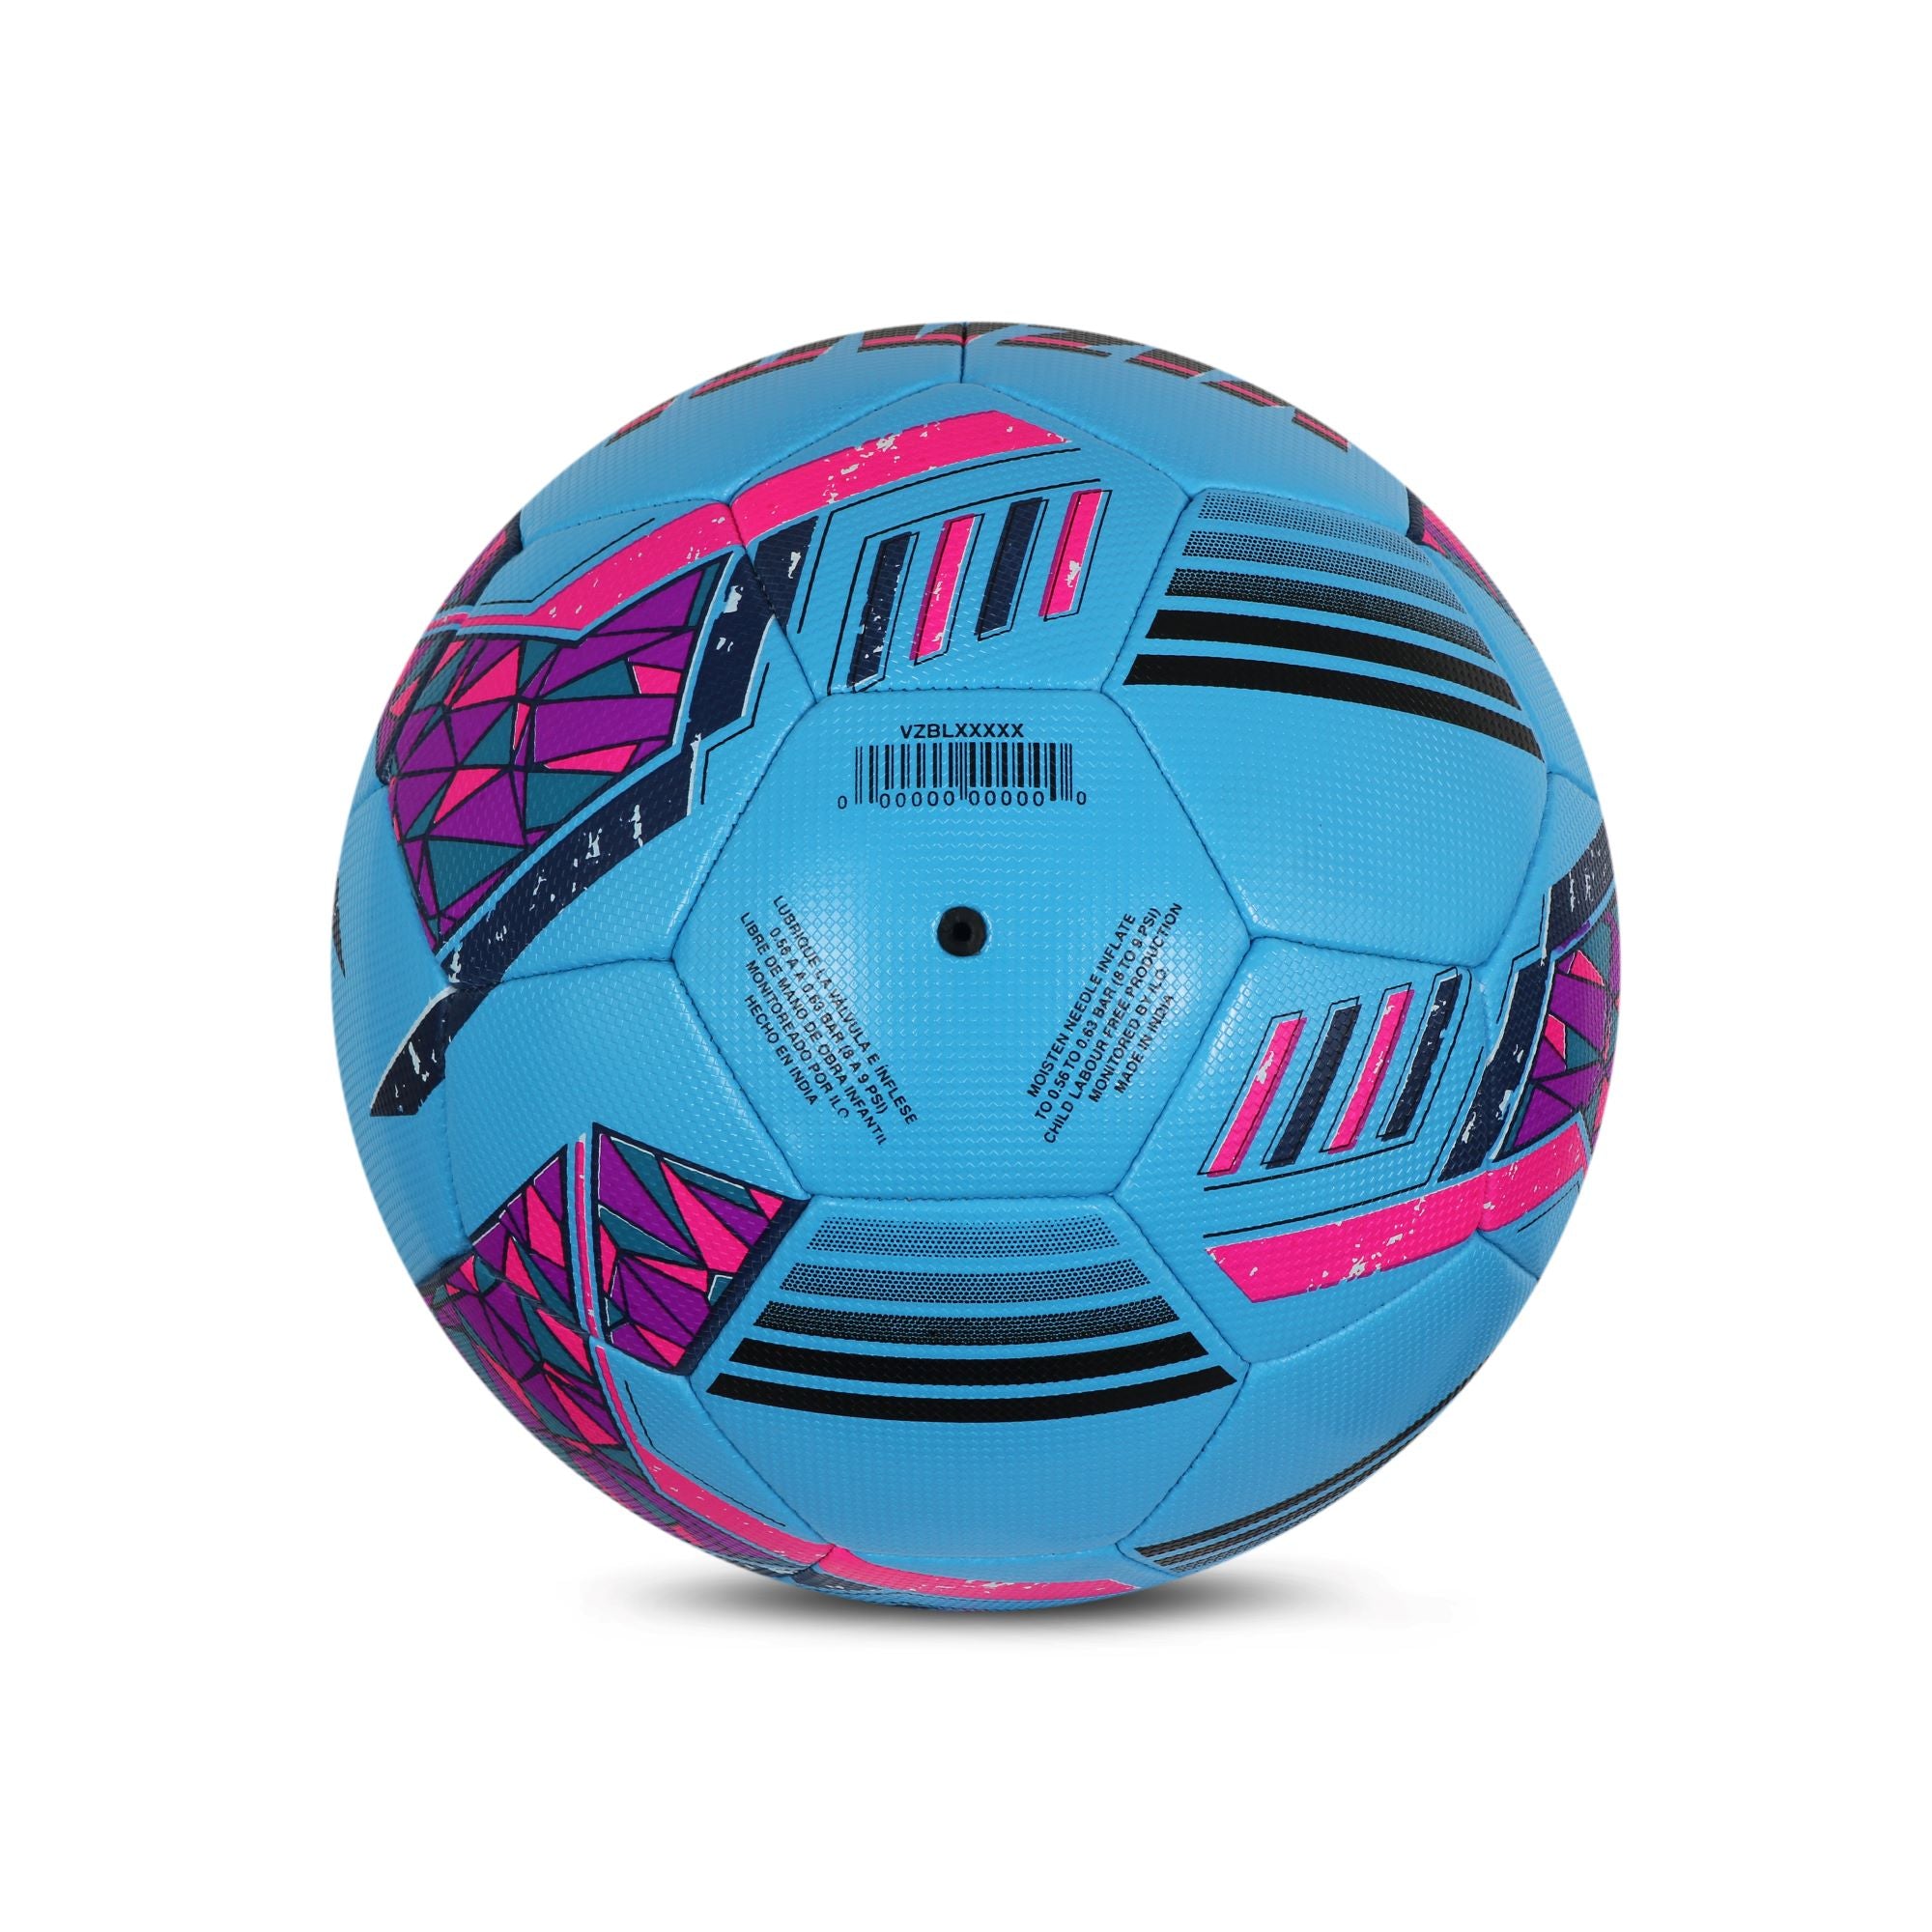 Reflect Pro Premium Indoor Soccer Ball-Sky Blue